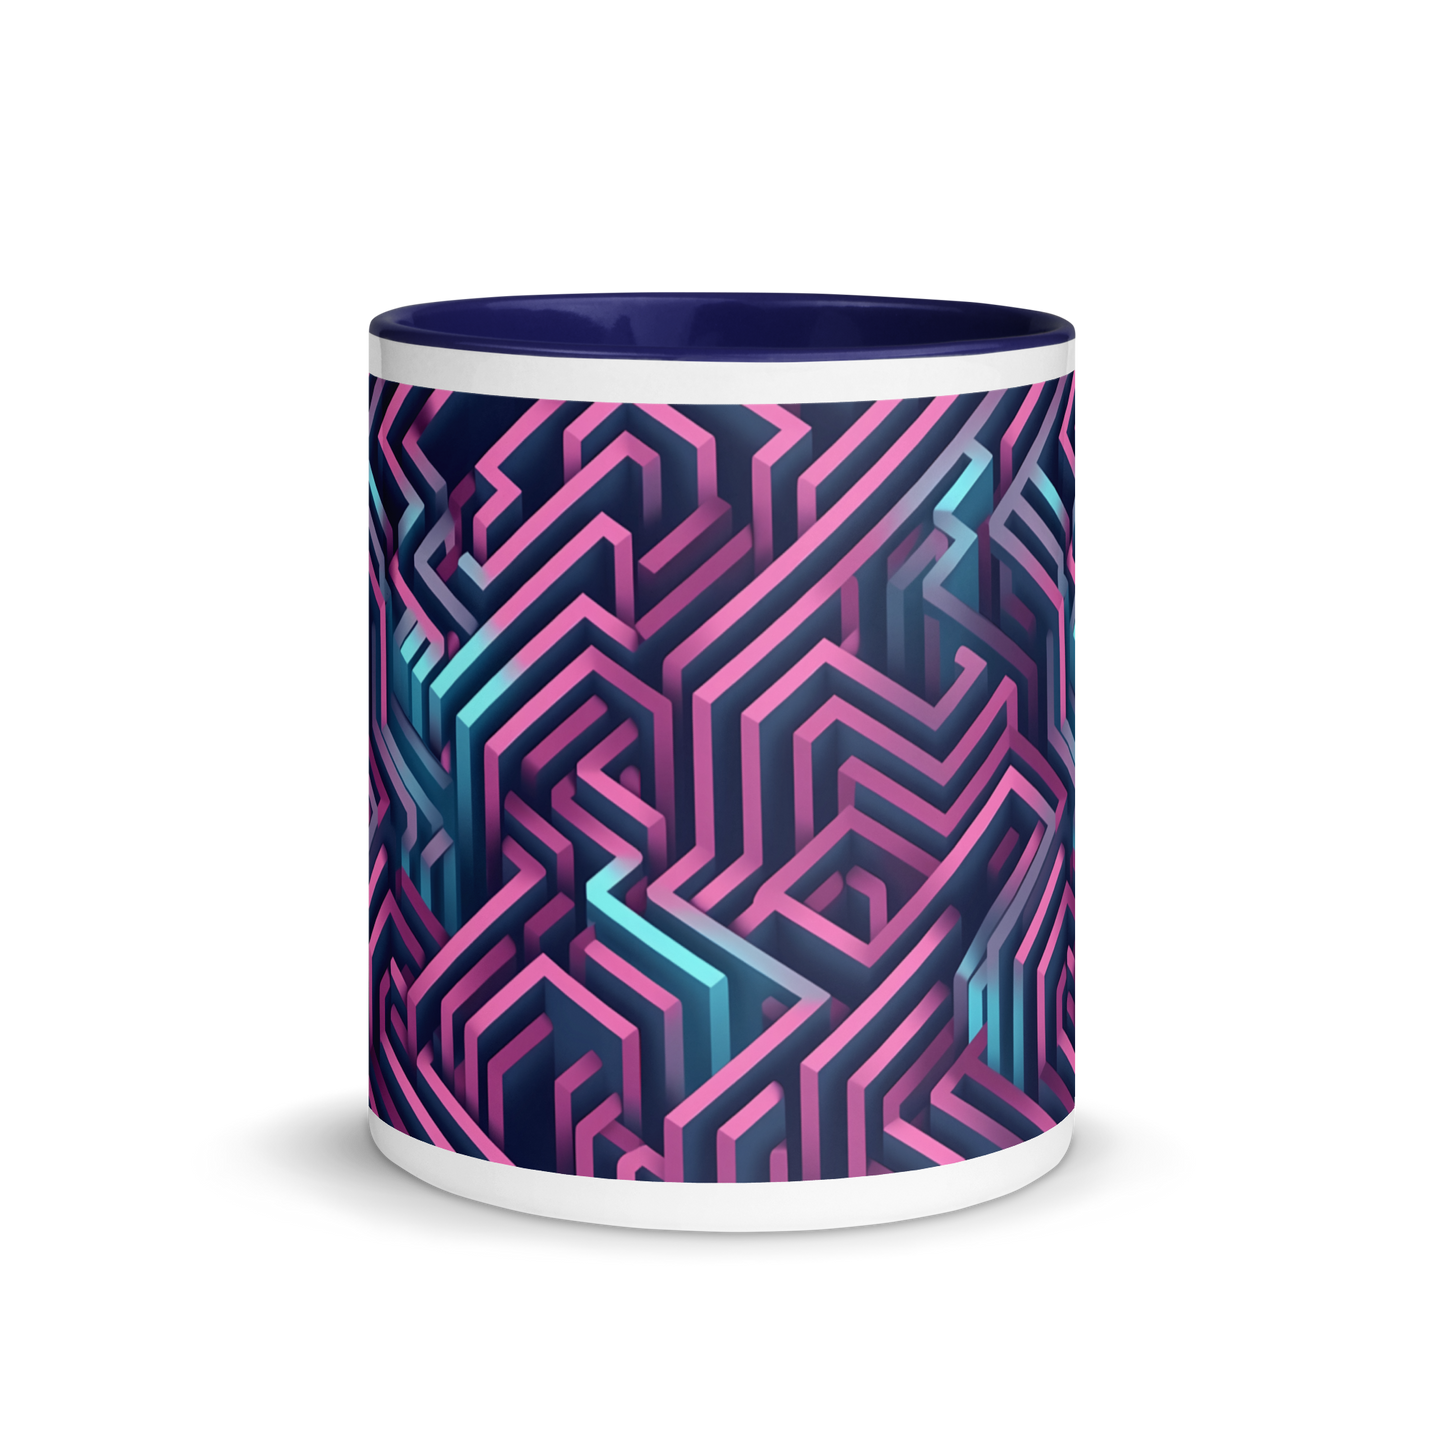 3D Maze Illusion | 3D Patterns | White Ceramic Mug with Color Inside - #4